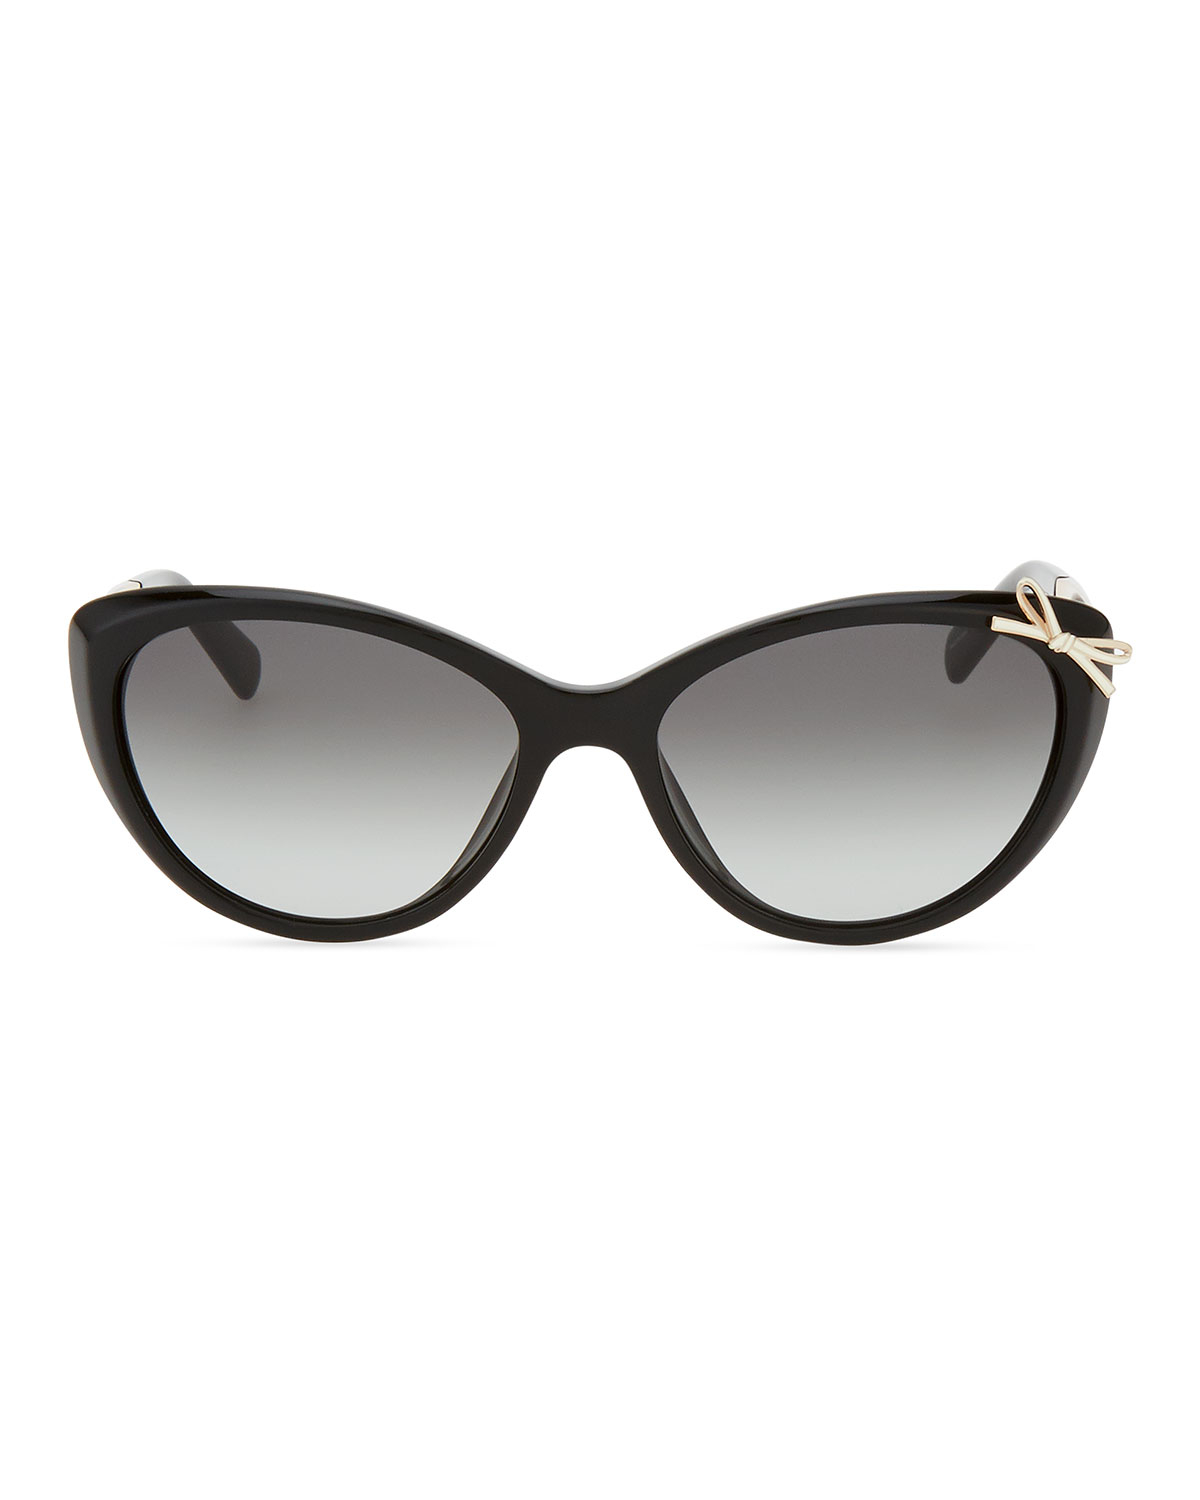 Lyst - Kate Spade New York Livia Bow Cat-eye Sunglasses in Black